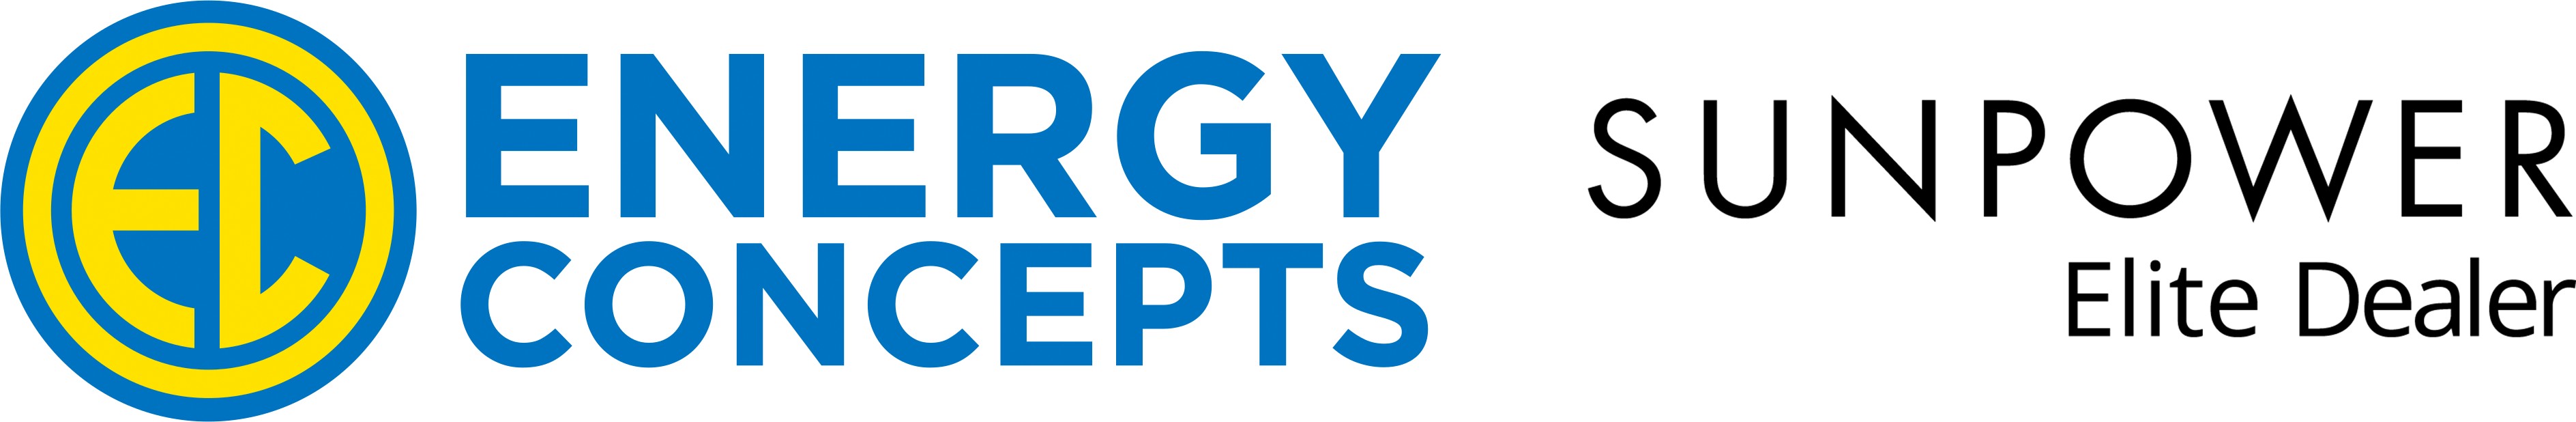 Energy Concepts Logo with SunPower Elite badge